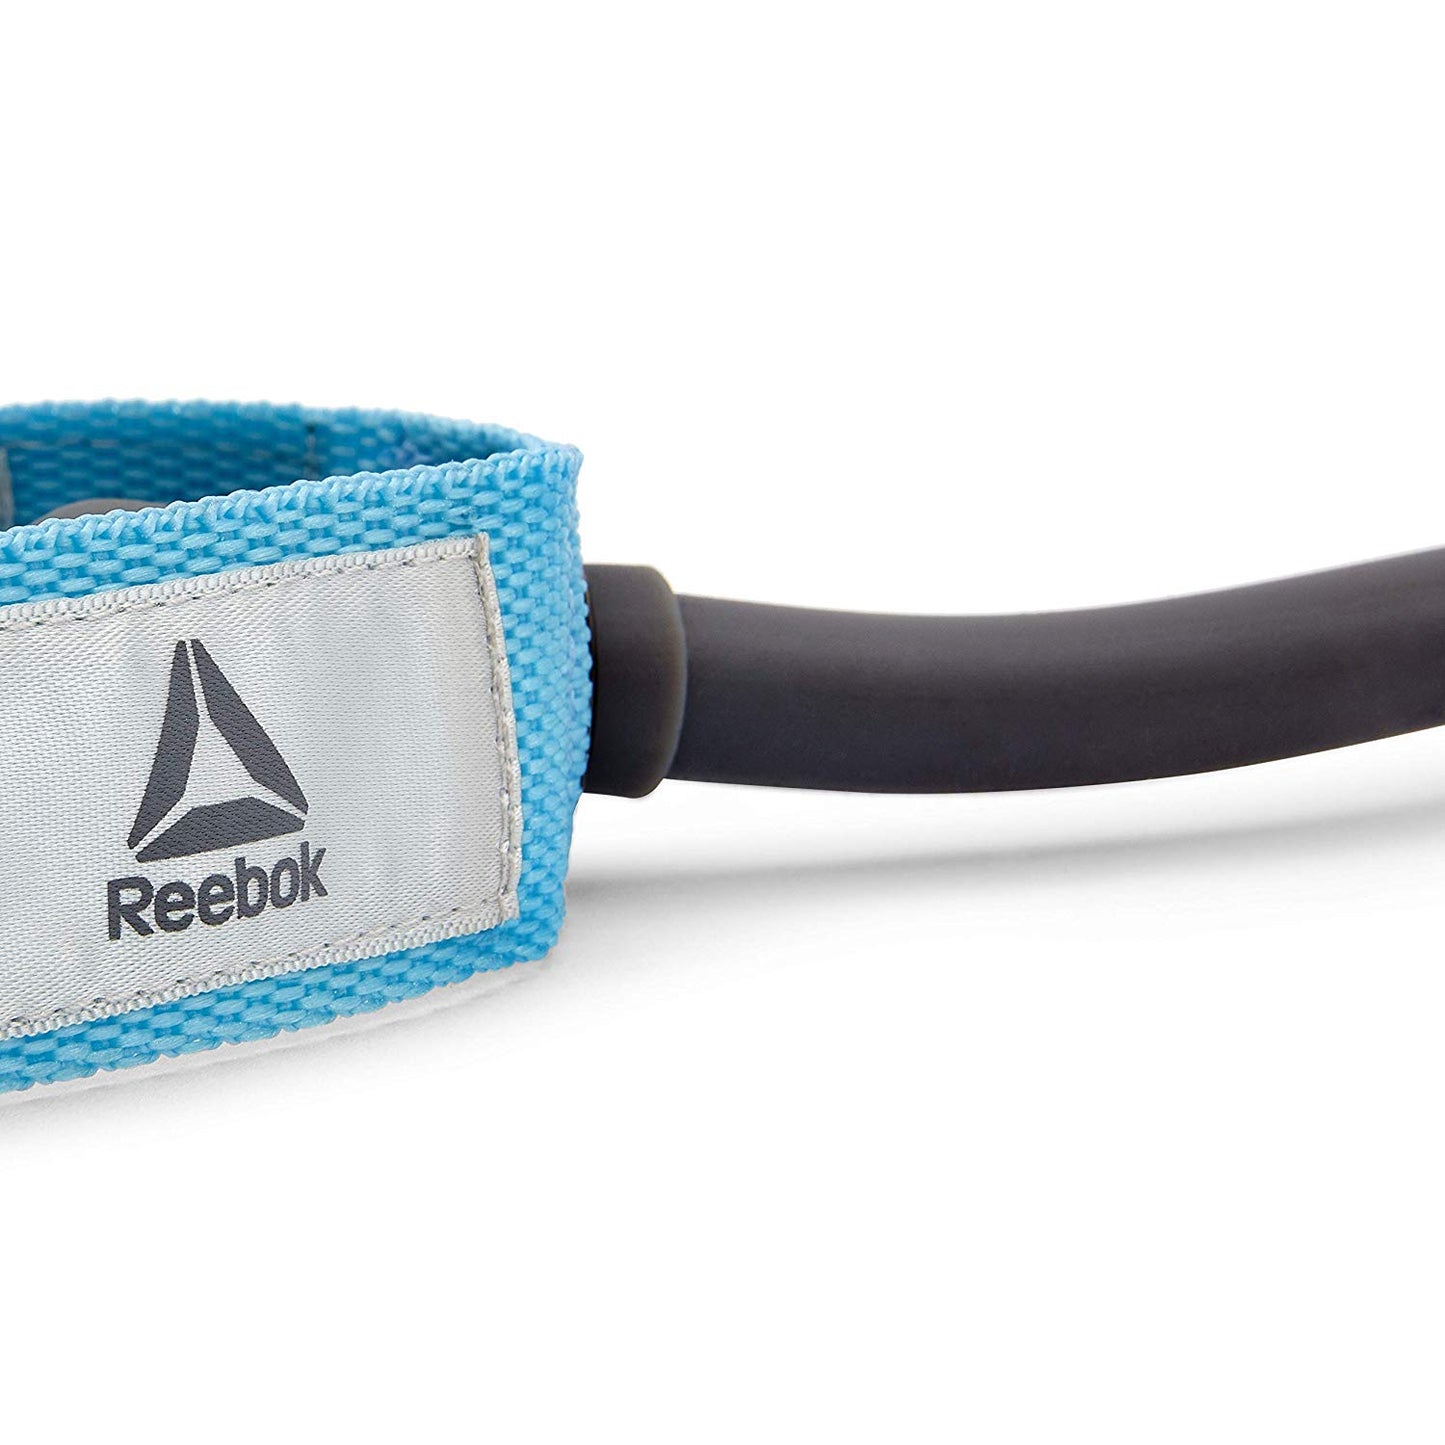 Reebok Resistance Tube (Blue) - Best Price online Prokicksports.com